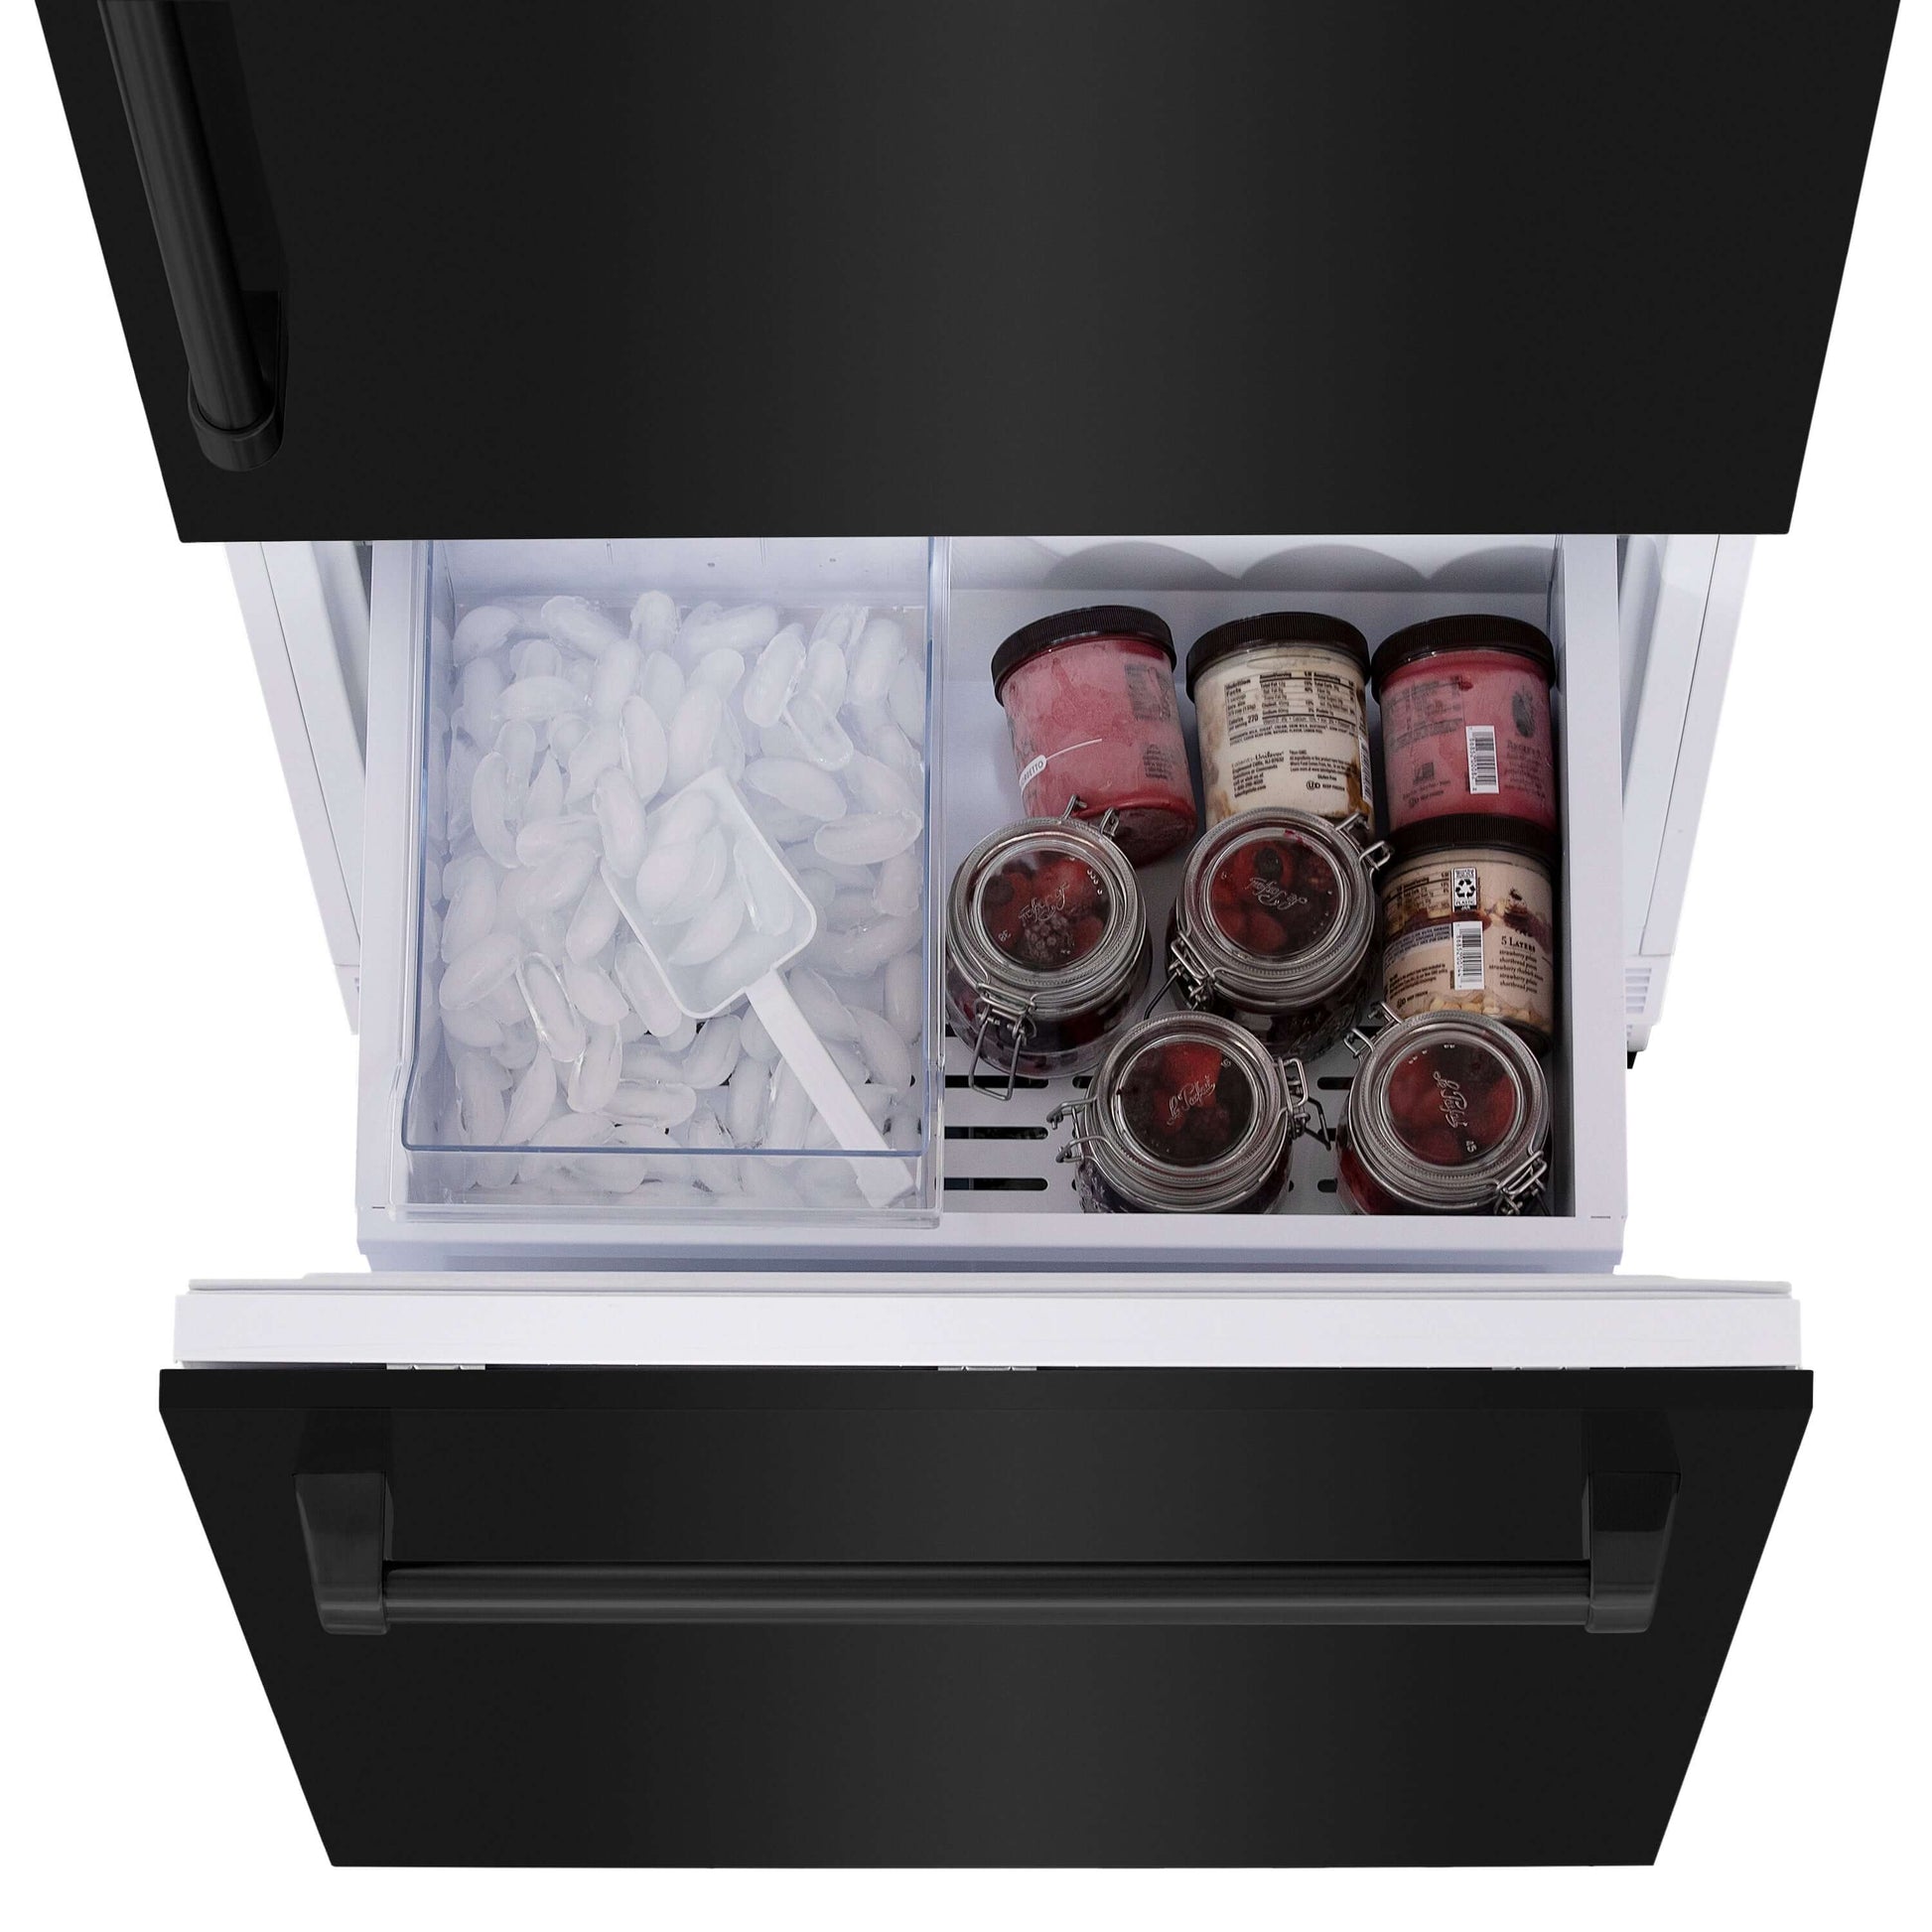 ZLINE 30" Built-In 2-Door Bottom Freezer Refrigerator with Internal Water and Ice Dispenser - Black Stainless Steel